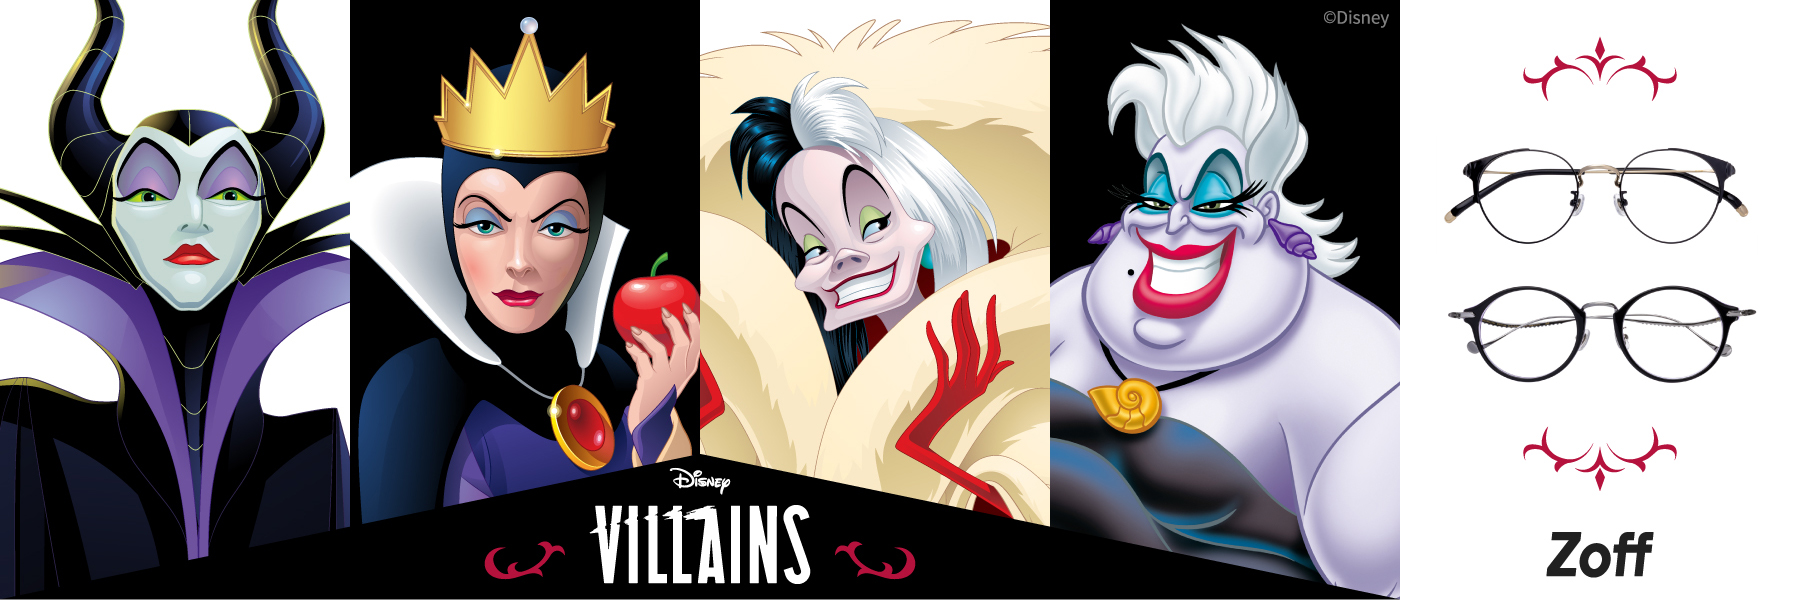 【Zoff初】ディズニーヴィランズがついに魅惑のメガネフレームに。「Disney Collection created by Zoff ”Villains”」